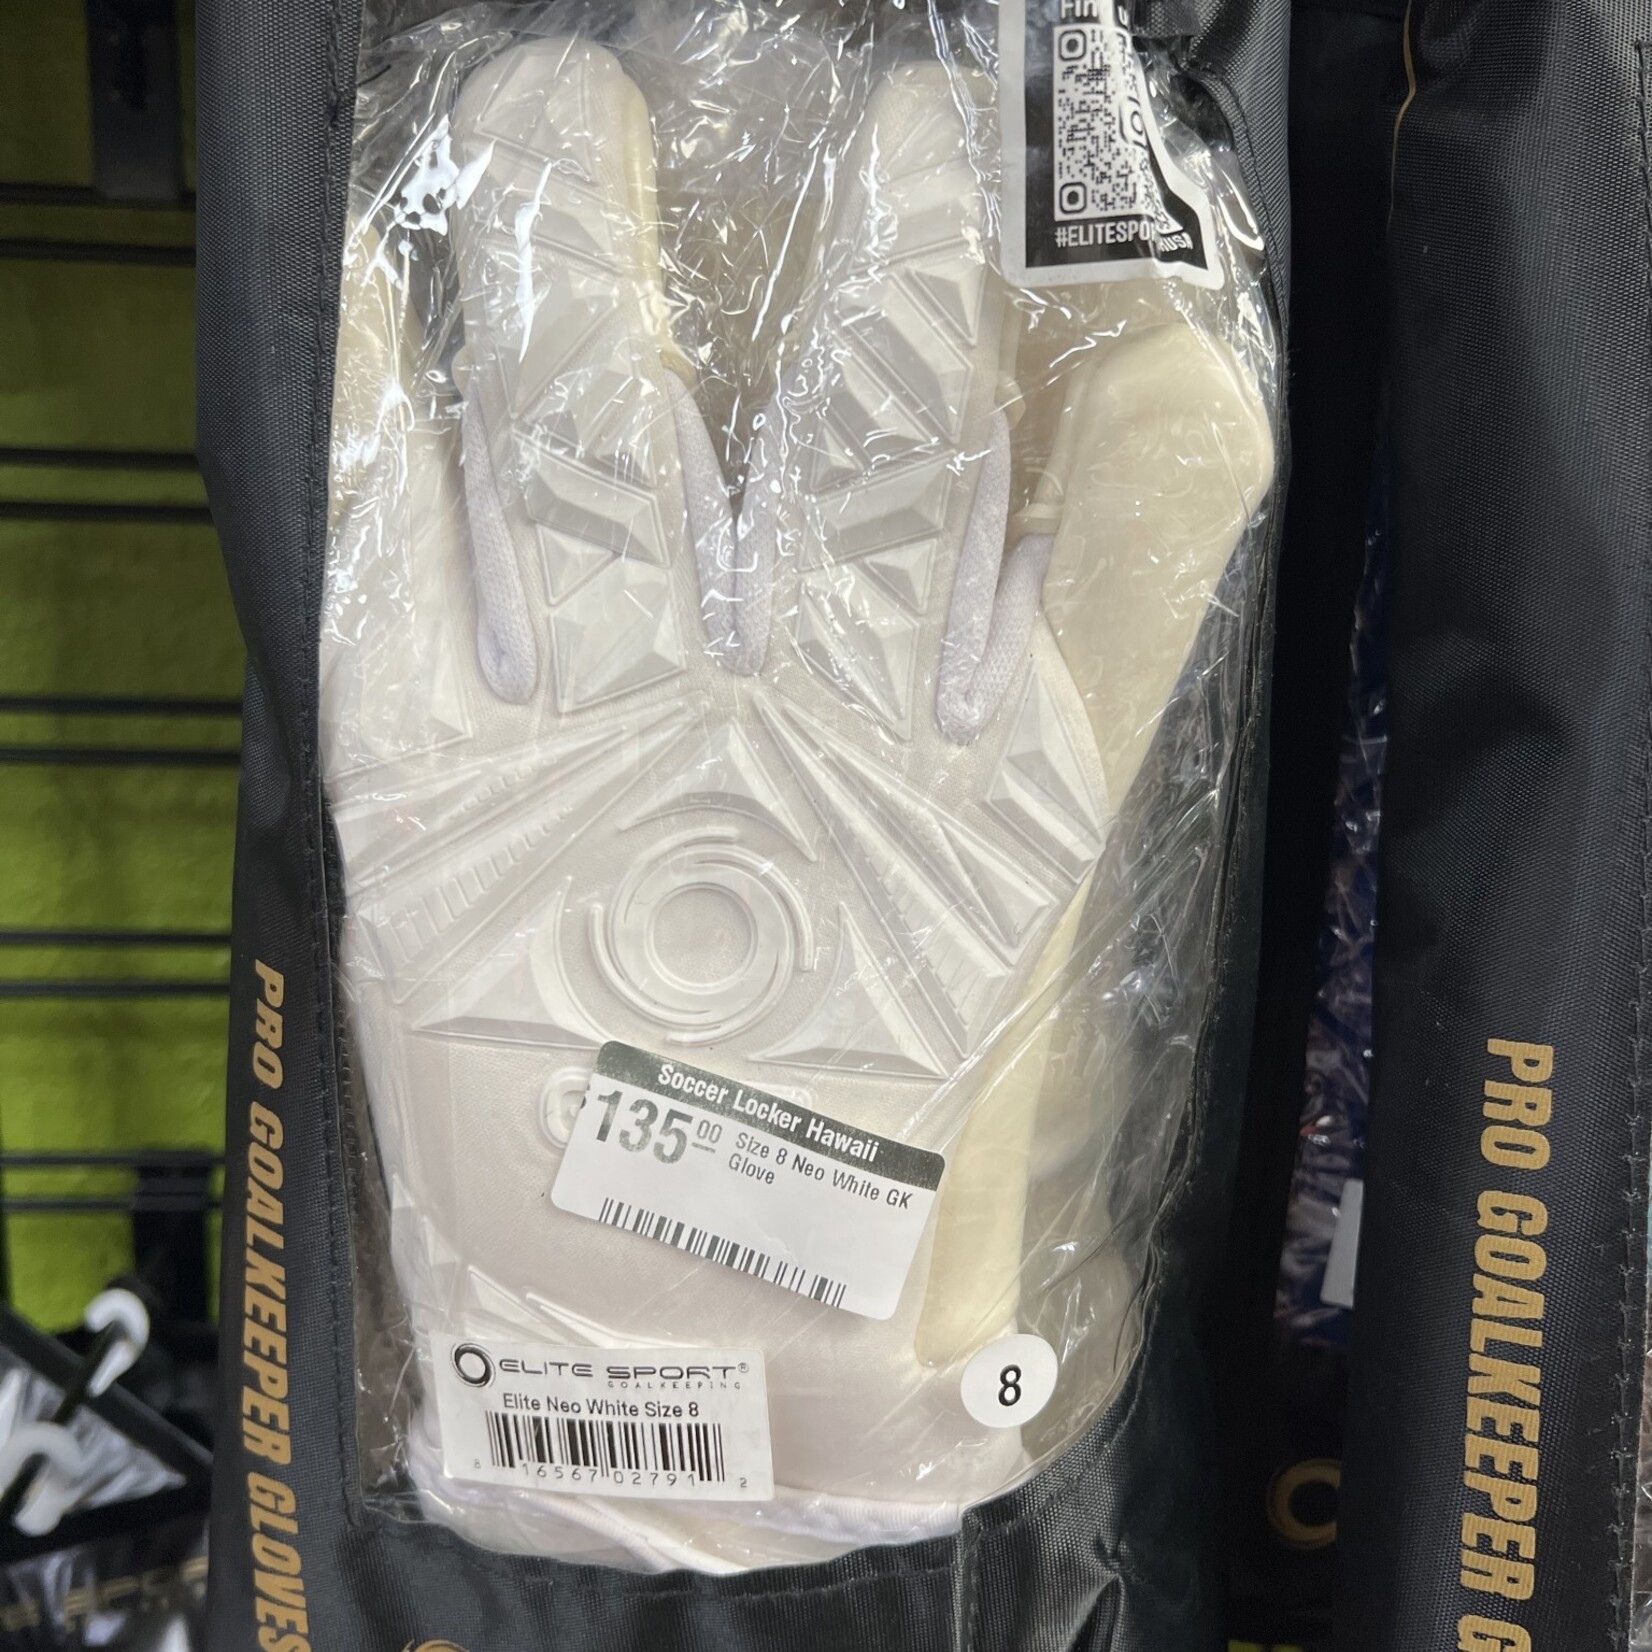 Size 8 Neo White GK Glove